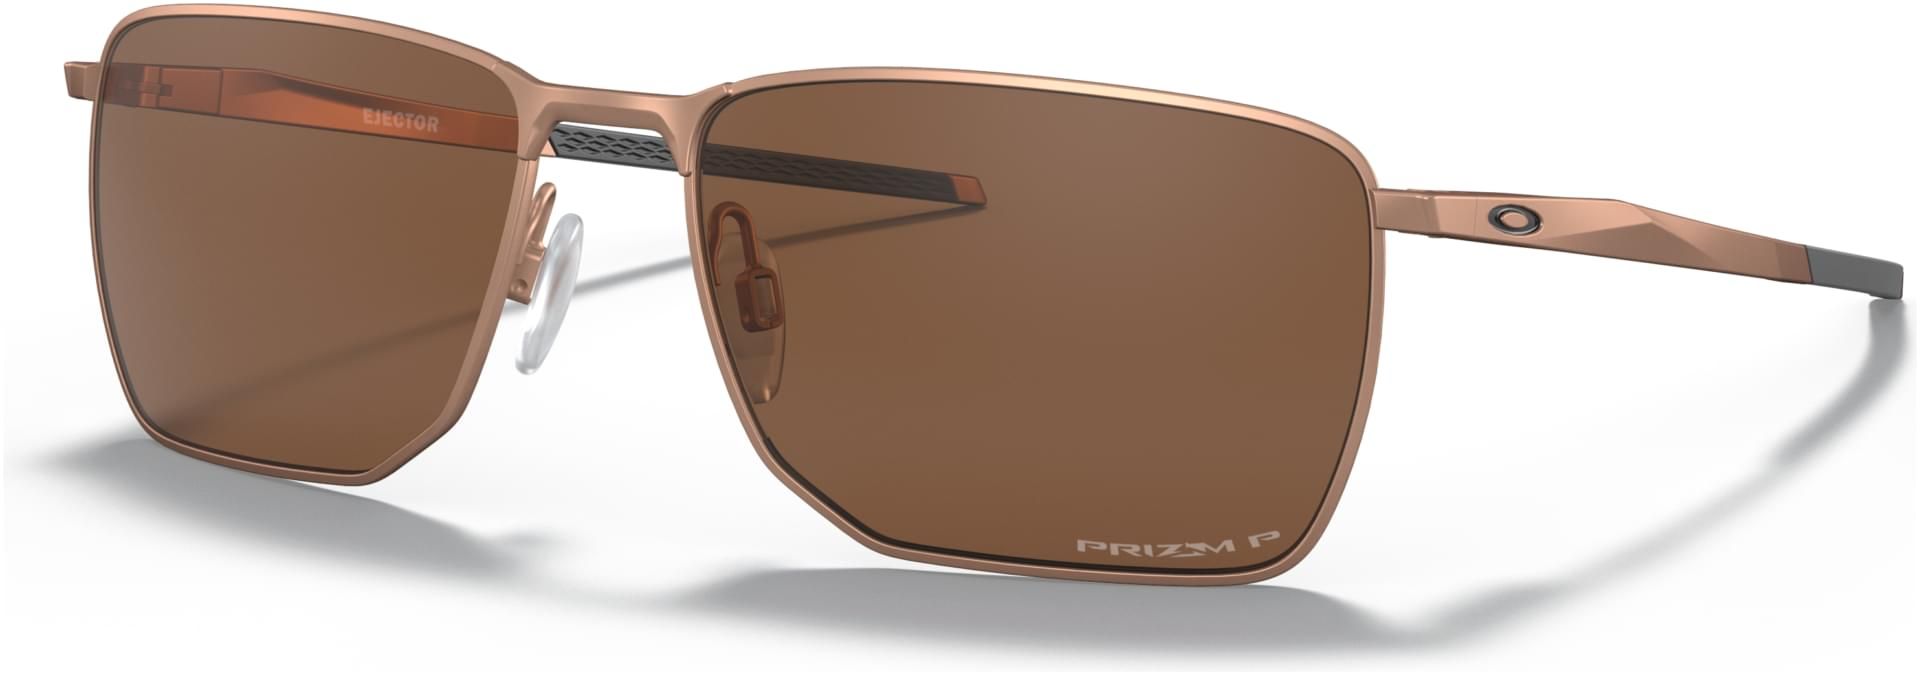 Buy Full-Rim Sporty Sunglasses Online at Best Prices in India - JioMart.